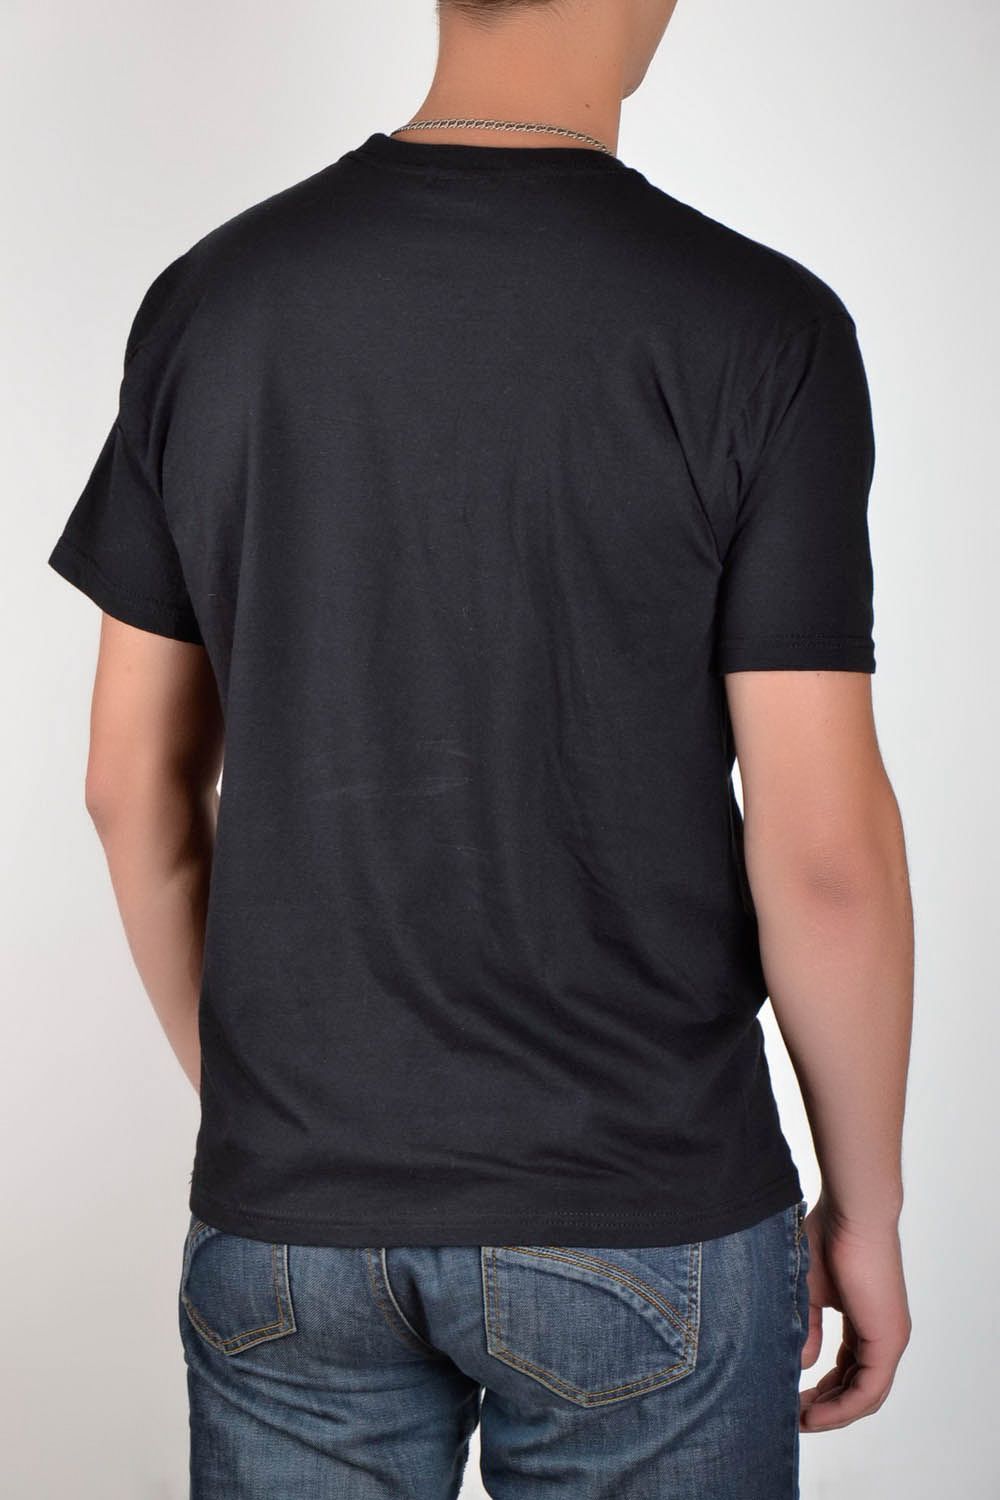 Camiseta preta masculina Coruja foto 4